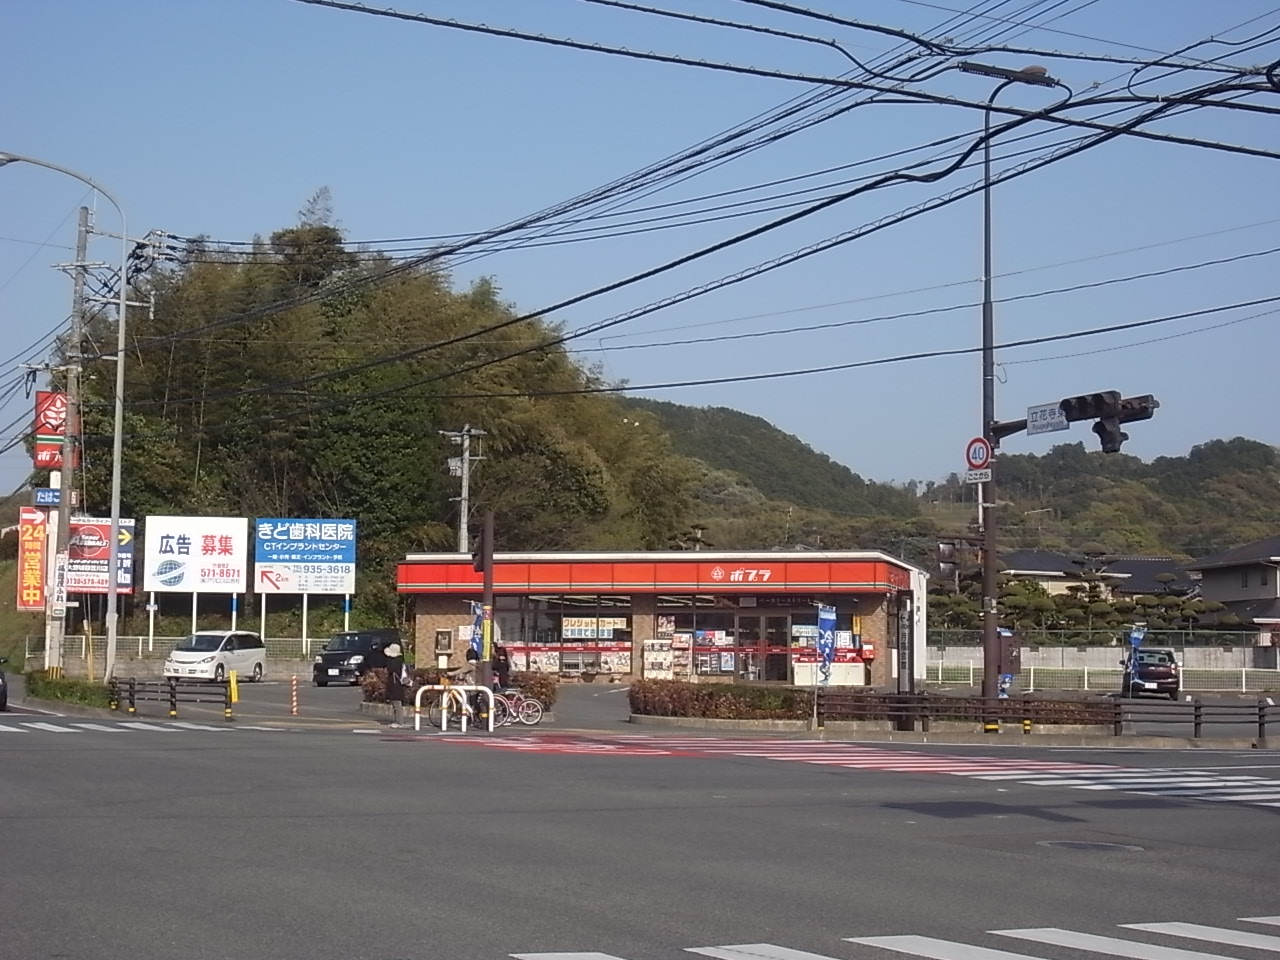 Convenience store. Poplar Kukominami store up (convenience store) 393m